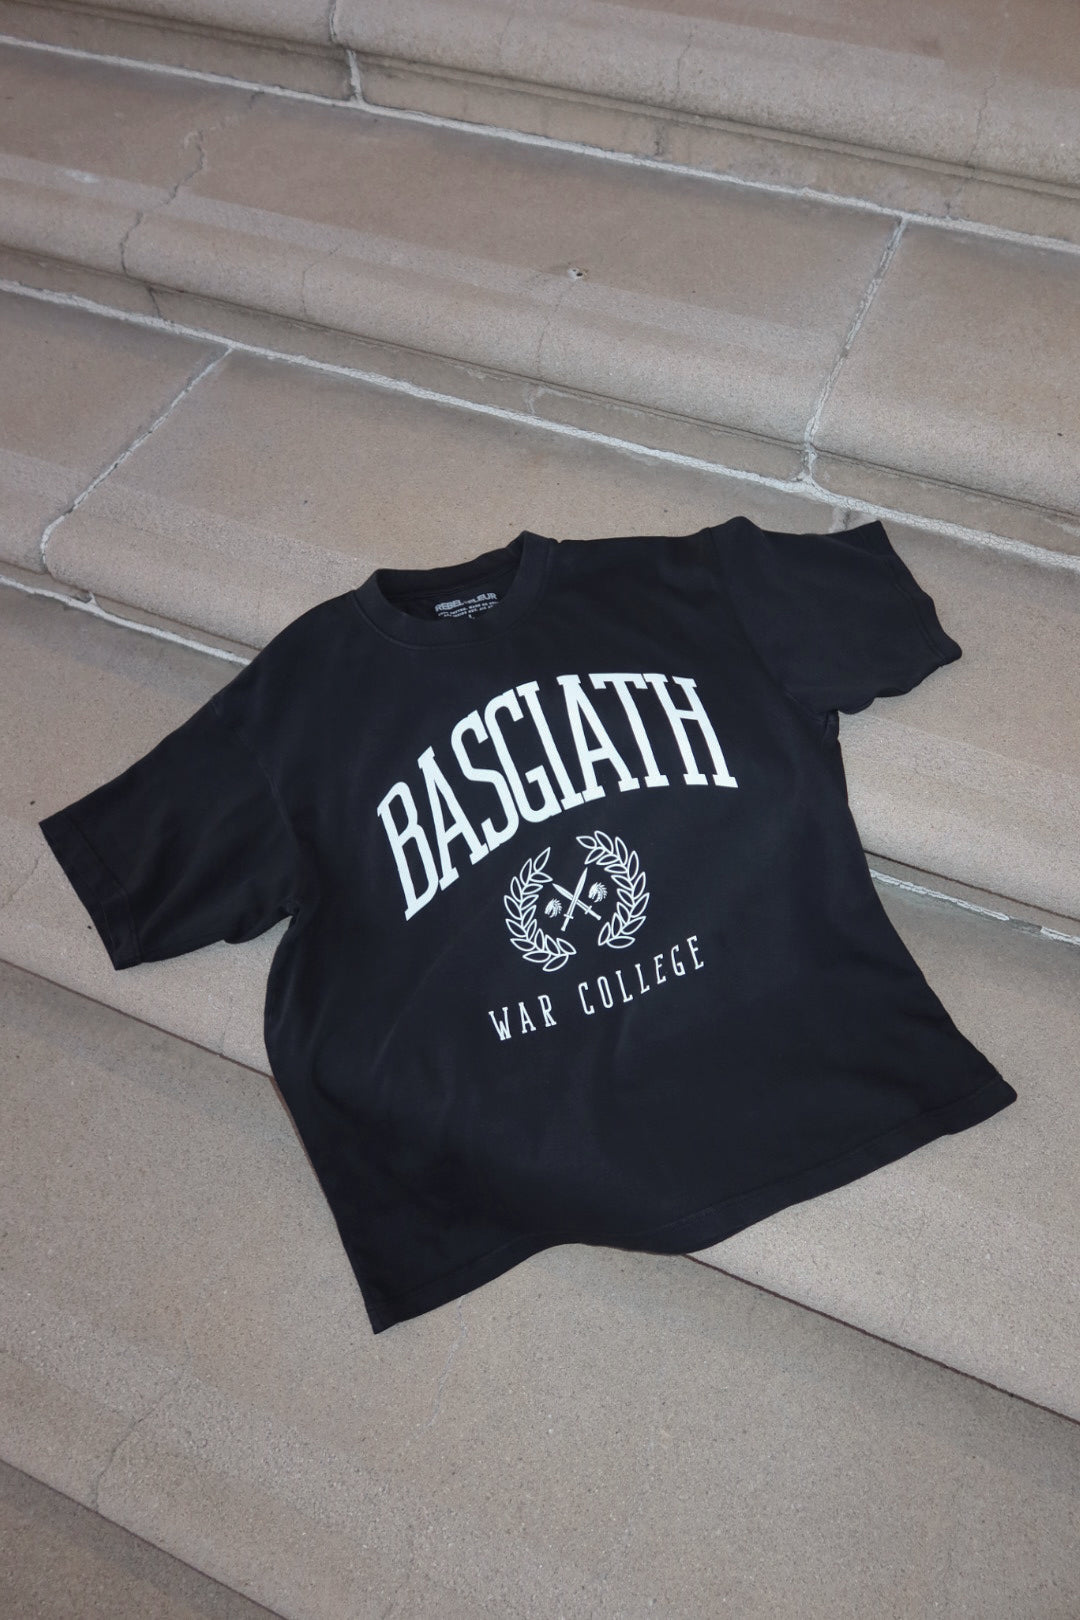 Basgiath Collegiate 'Lounge' T-Shirt | Restock Coming Soon